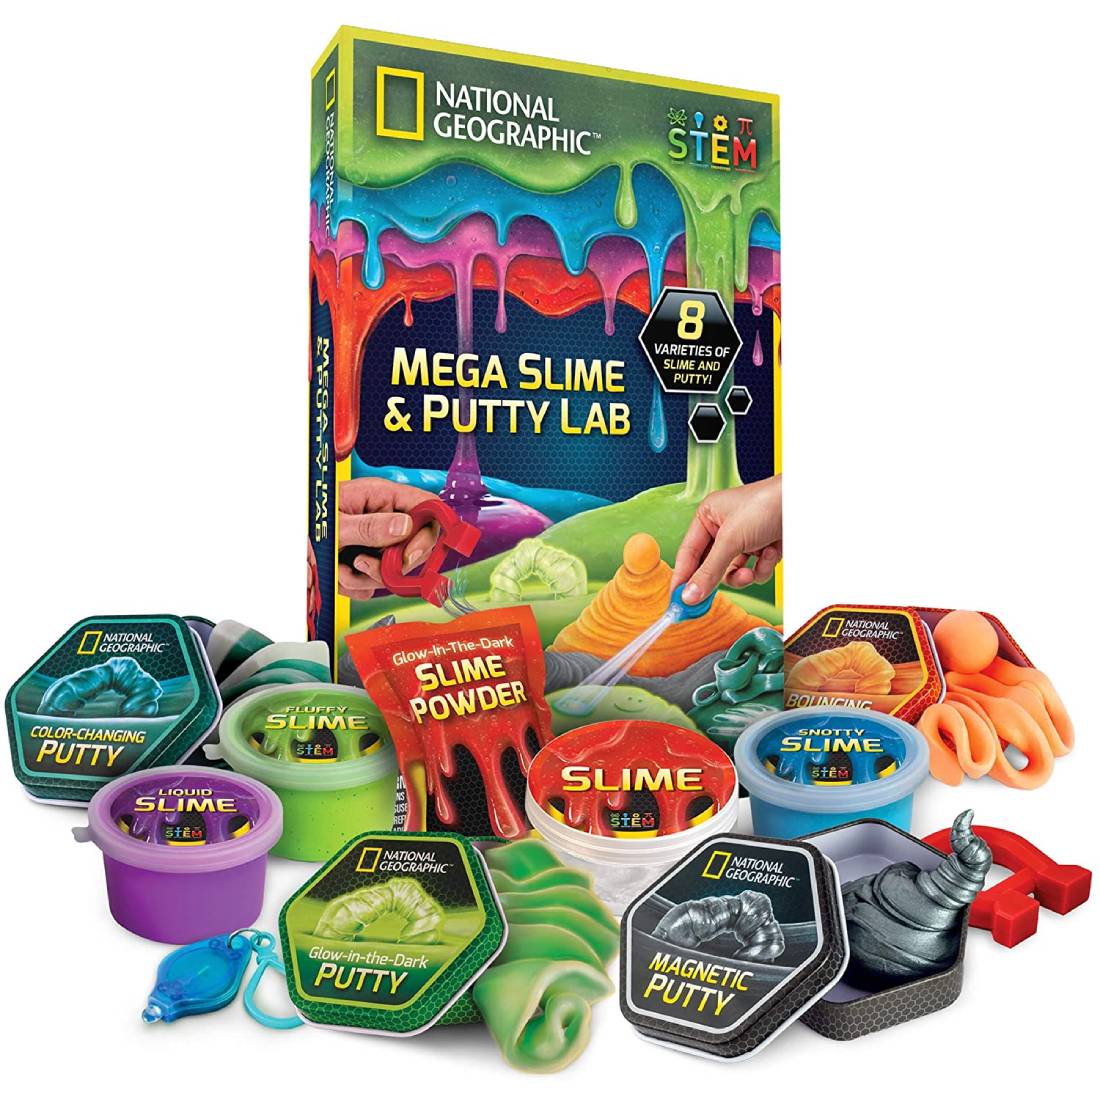 NATIONAL GEOGRAPHIC Mega Slime & Putty Lab 4 tipos de increíbles juguetes Slime